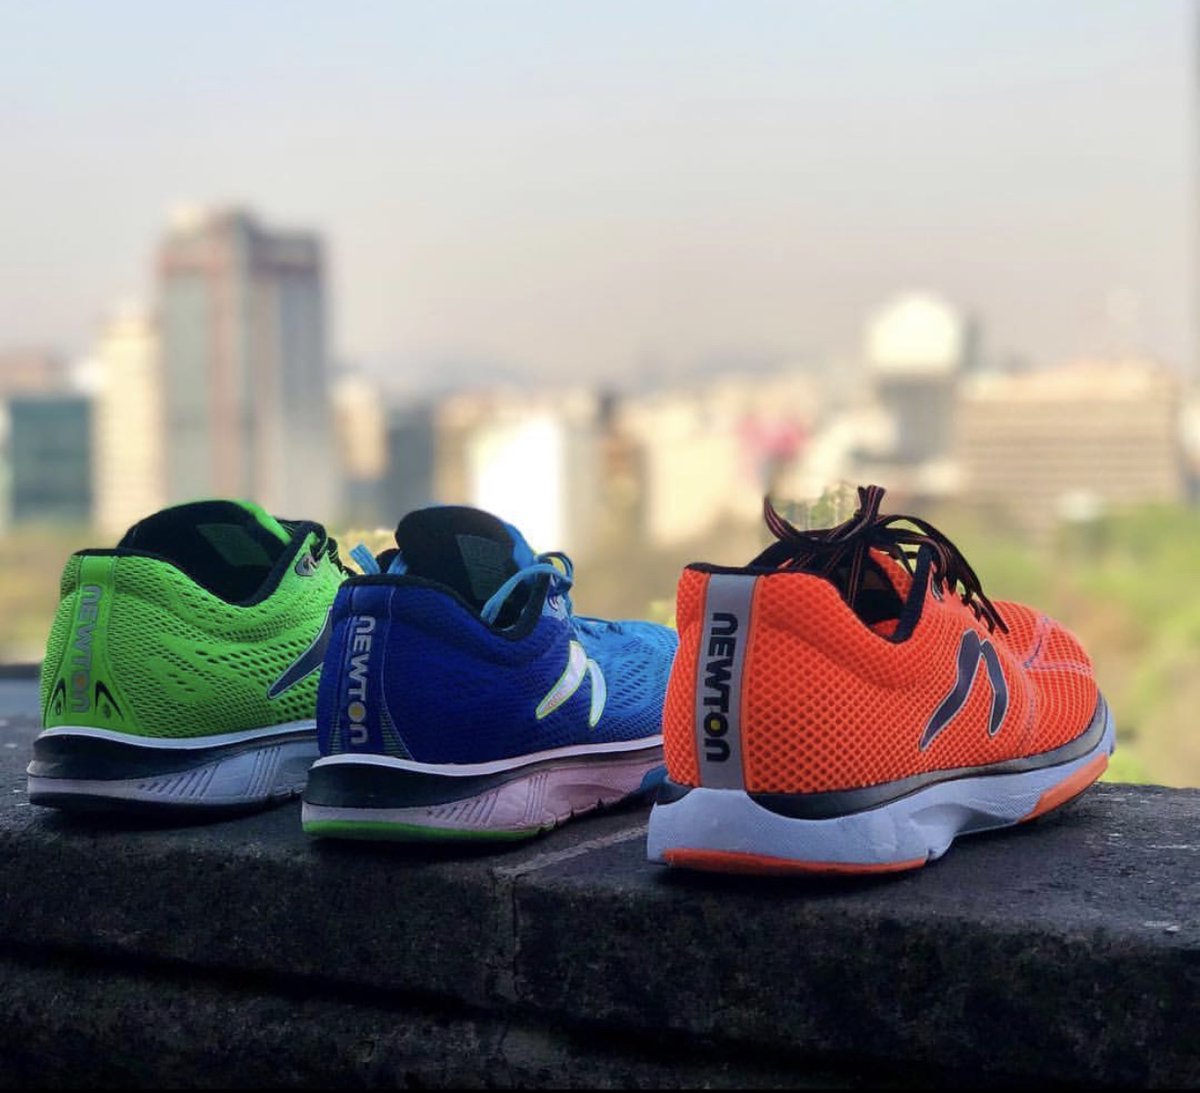 newton running shoes 2019